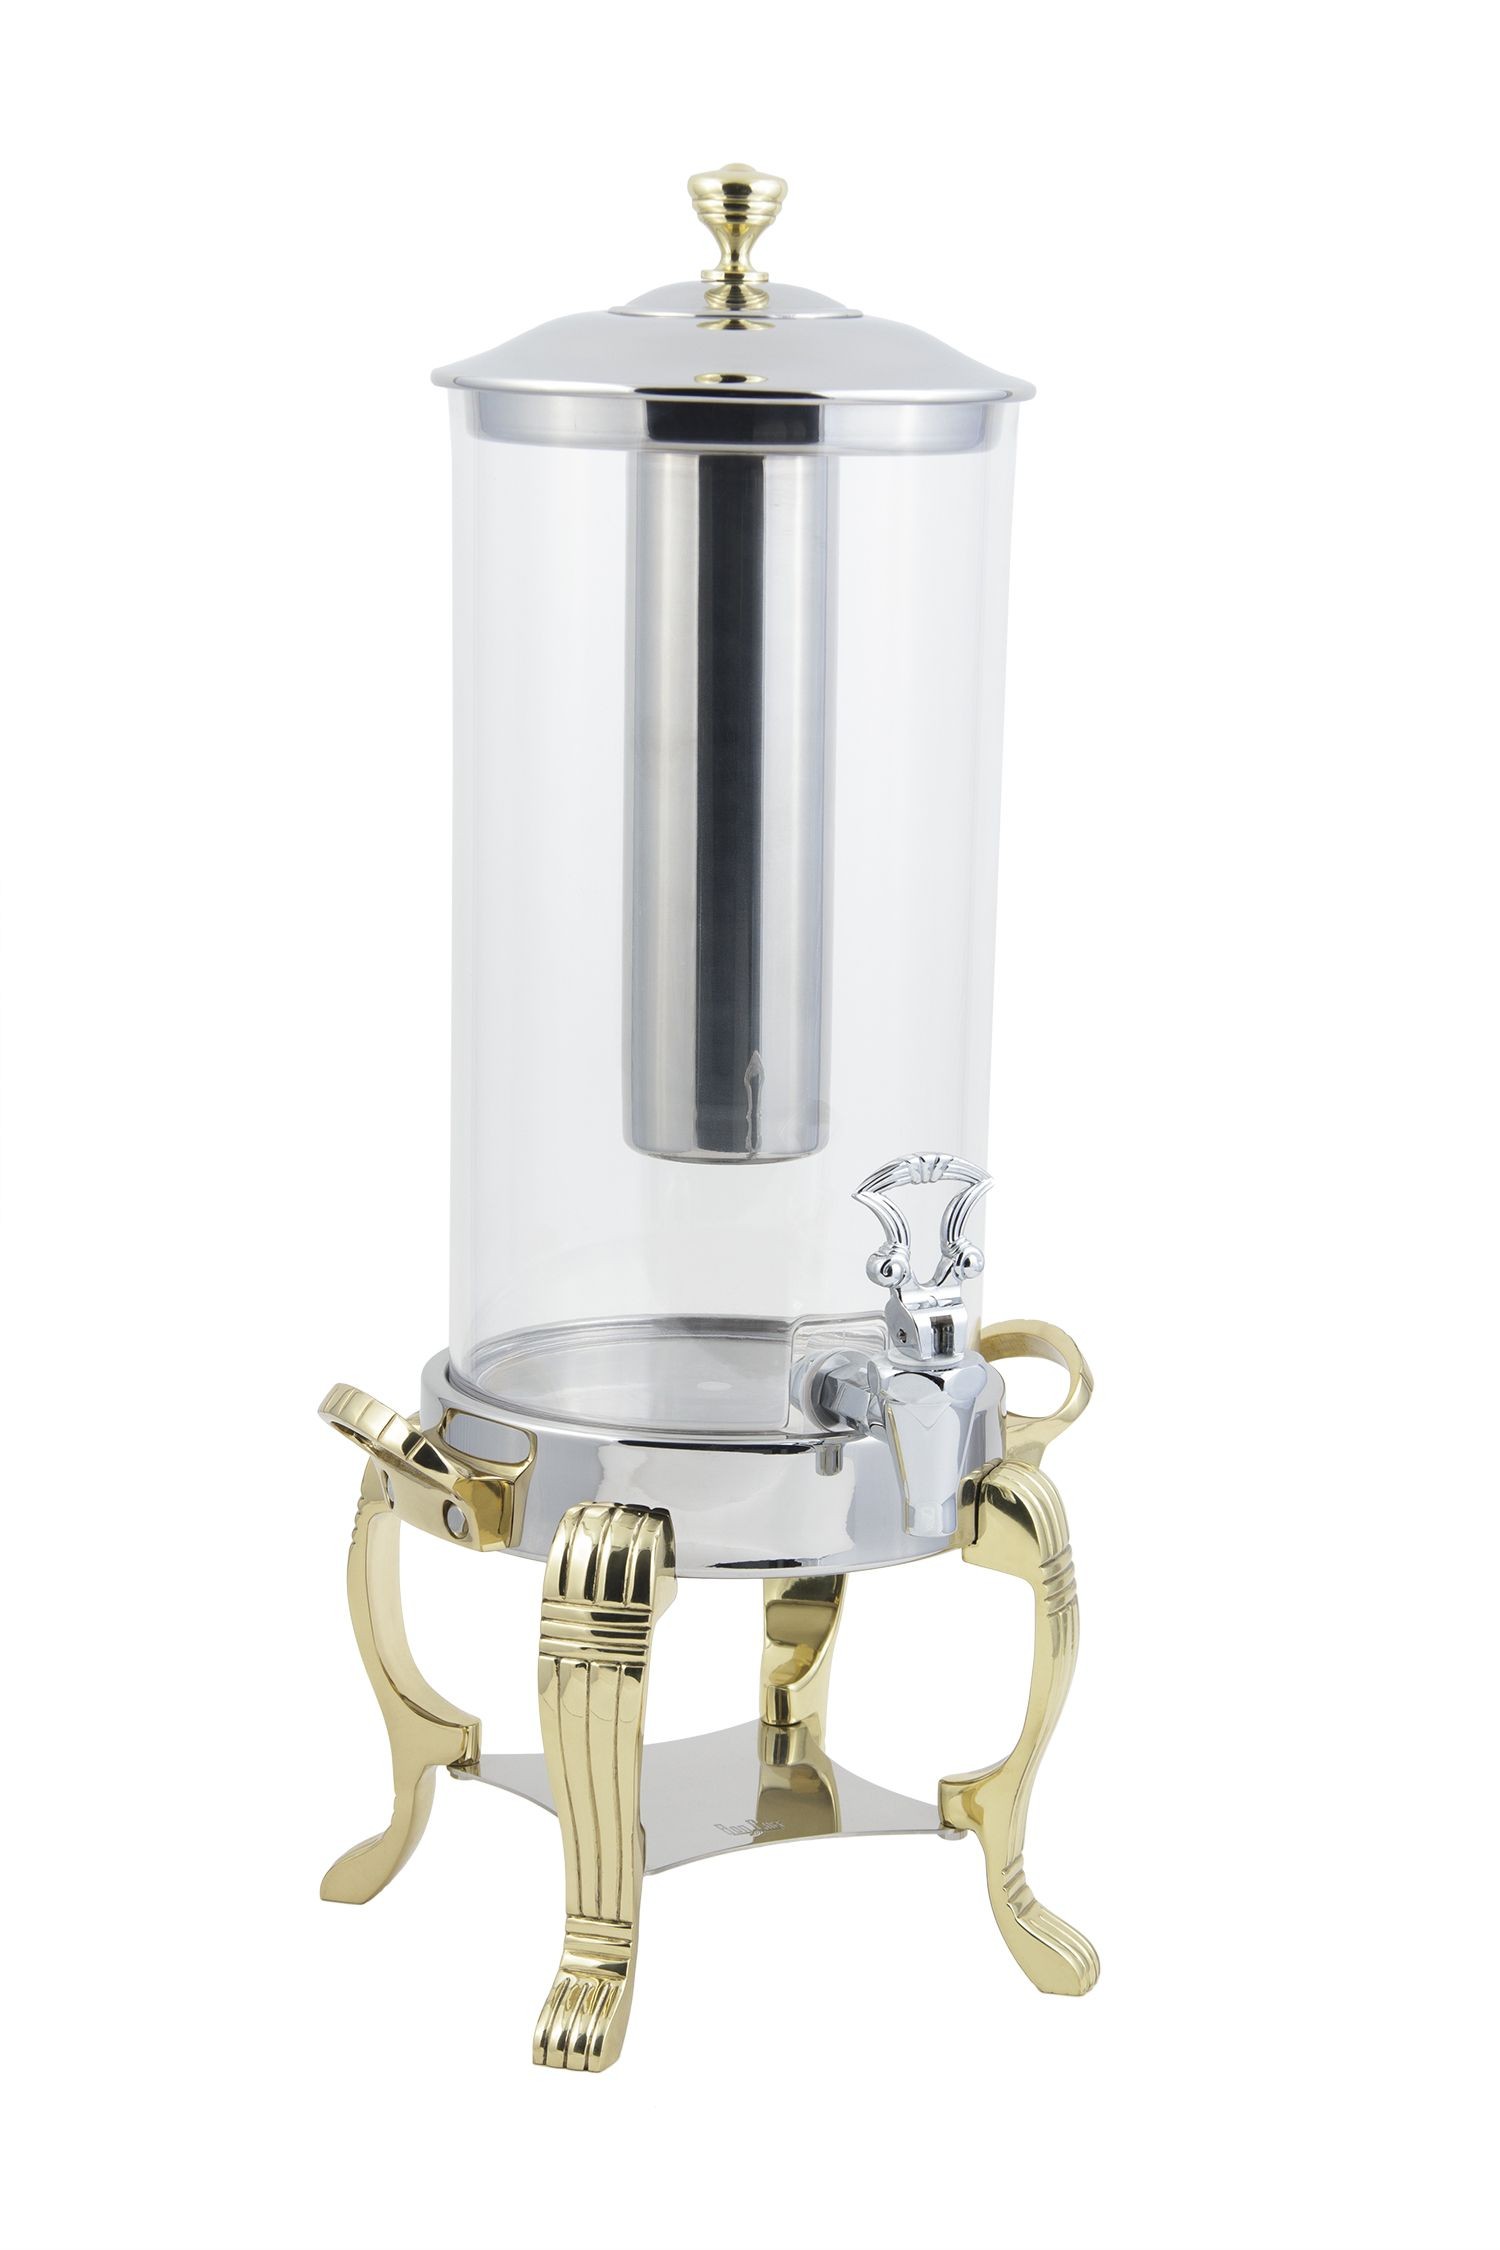 Bon Chef 40500 Aurora Juice Dispenser with Brass Finish. Stainless Steel Ice Chamber, 2 Gallon